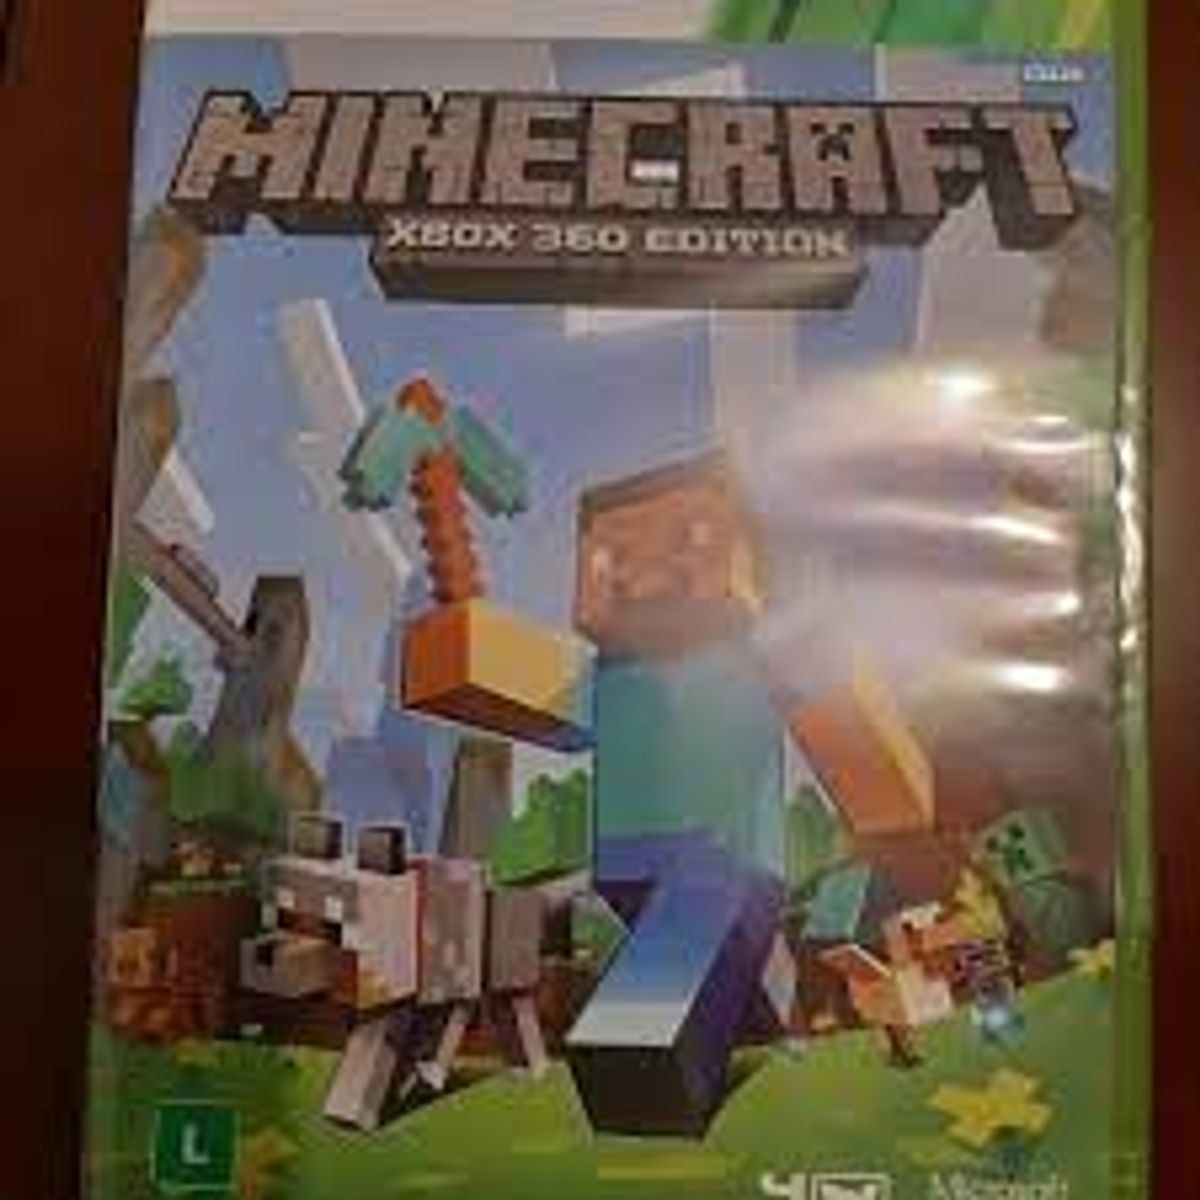 Jogo Minecraft Xbox 360 Edition Xbox 360 Míd Física Original